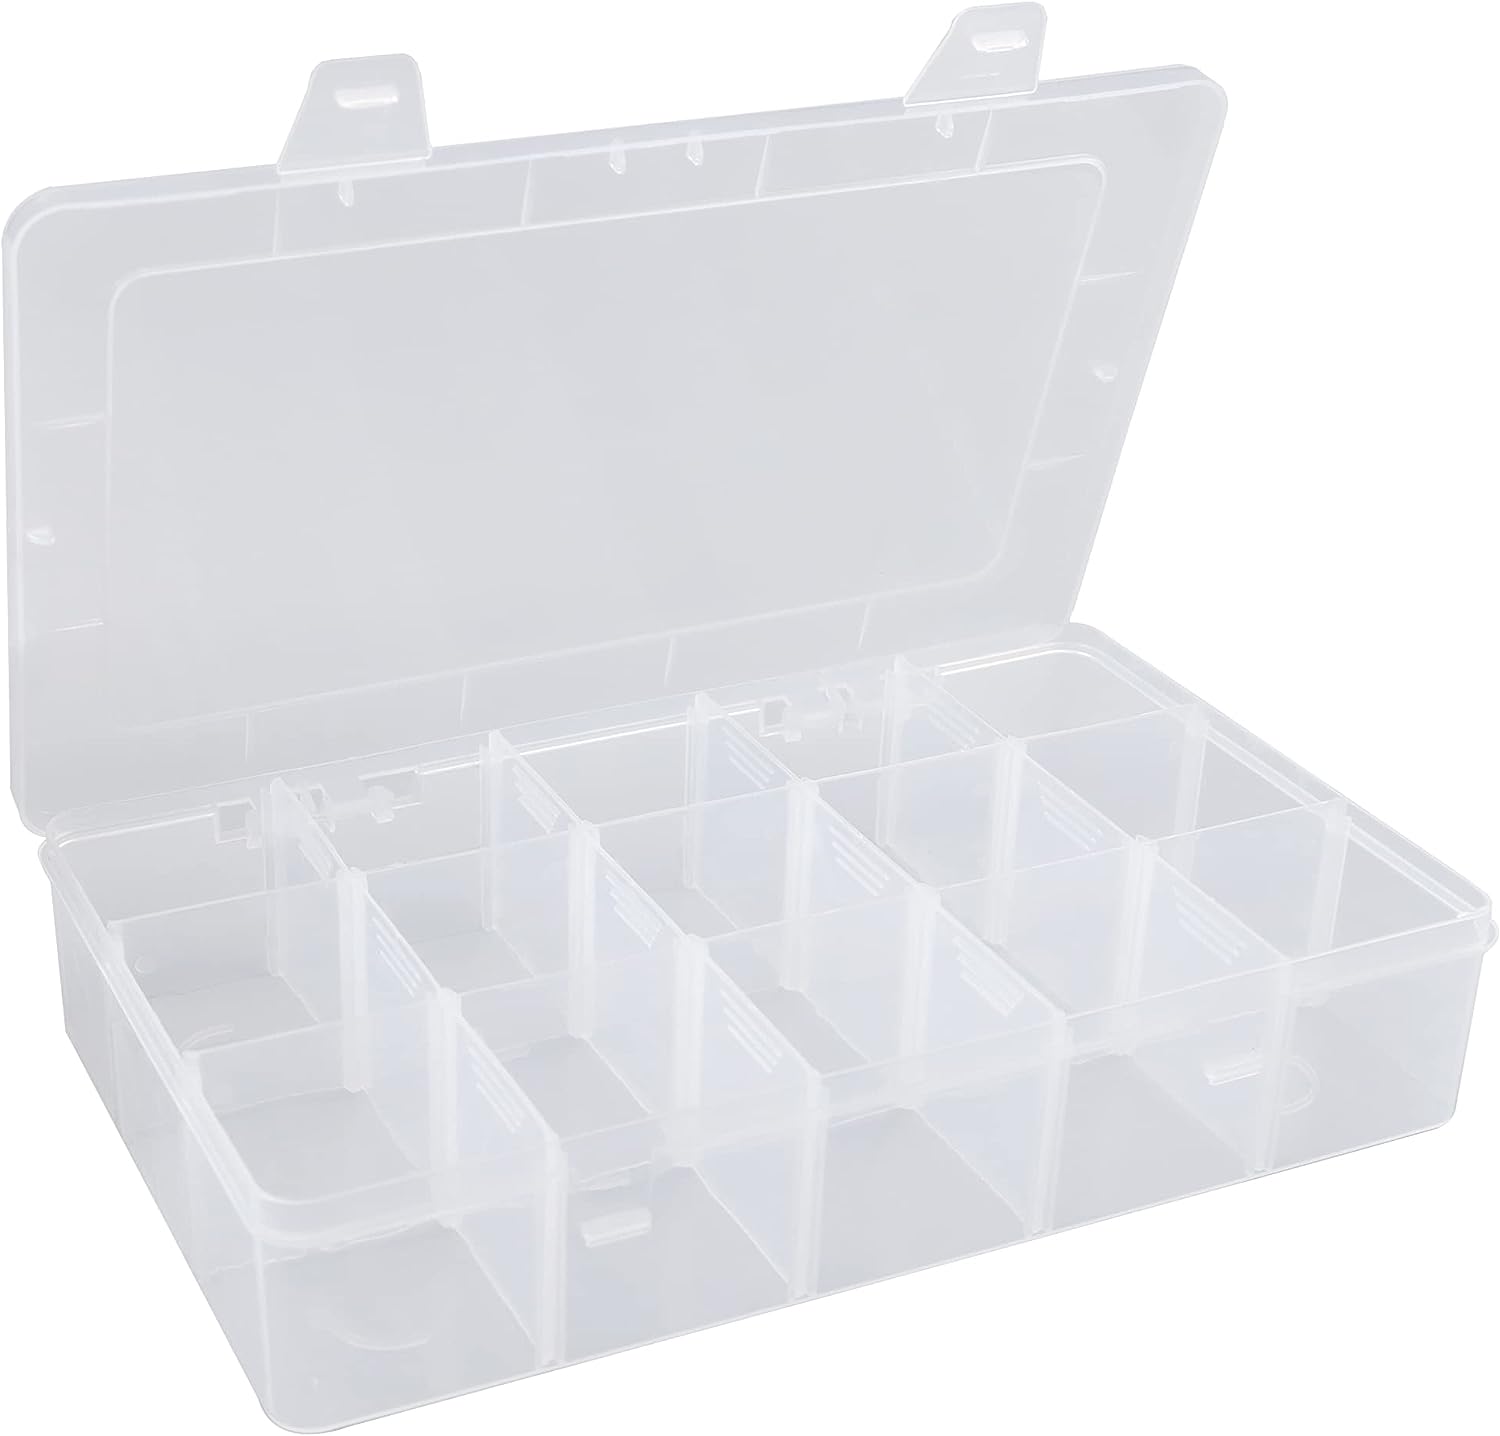 Clear Plastic Compartment Boxes WholeSale - Price List, Bulk Buy